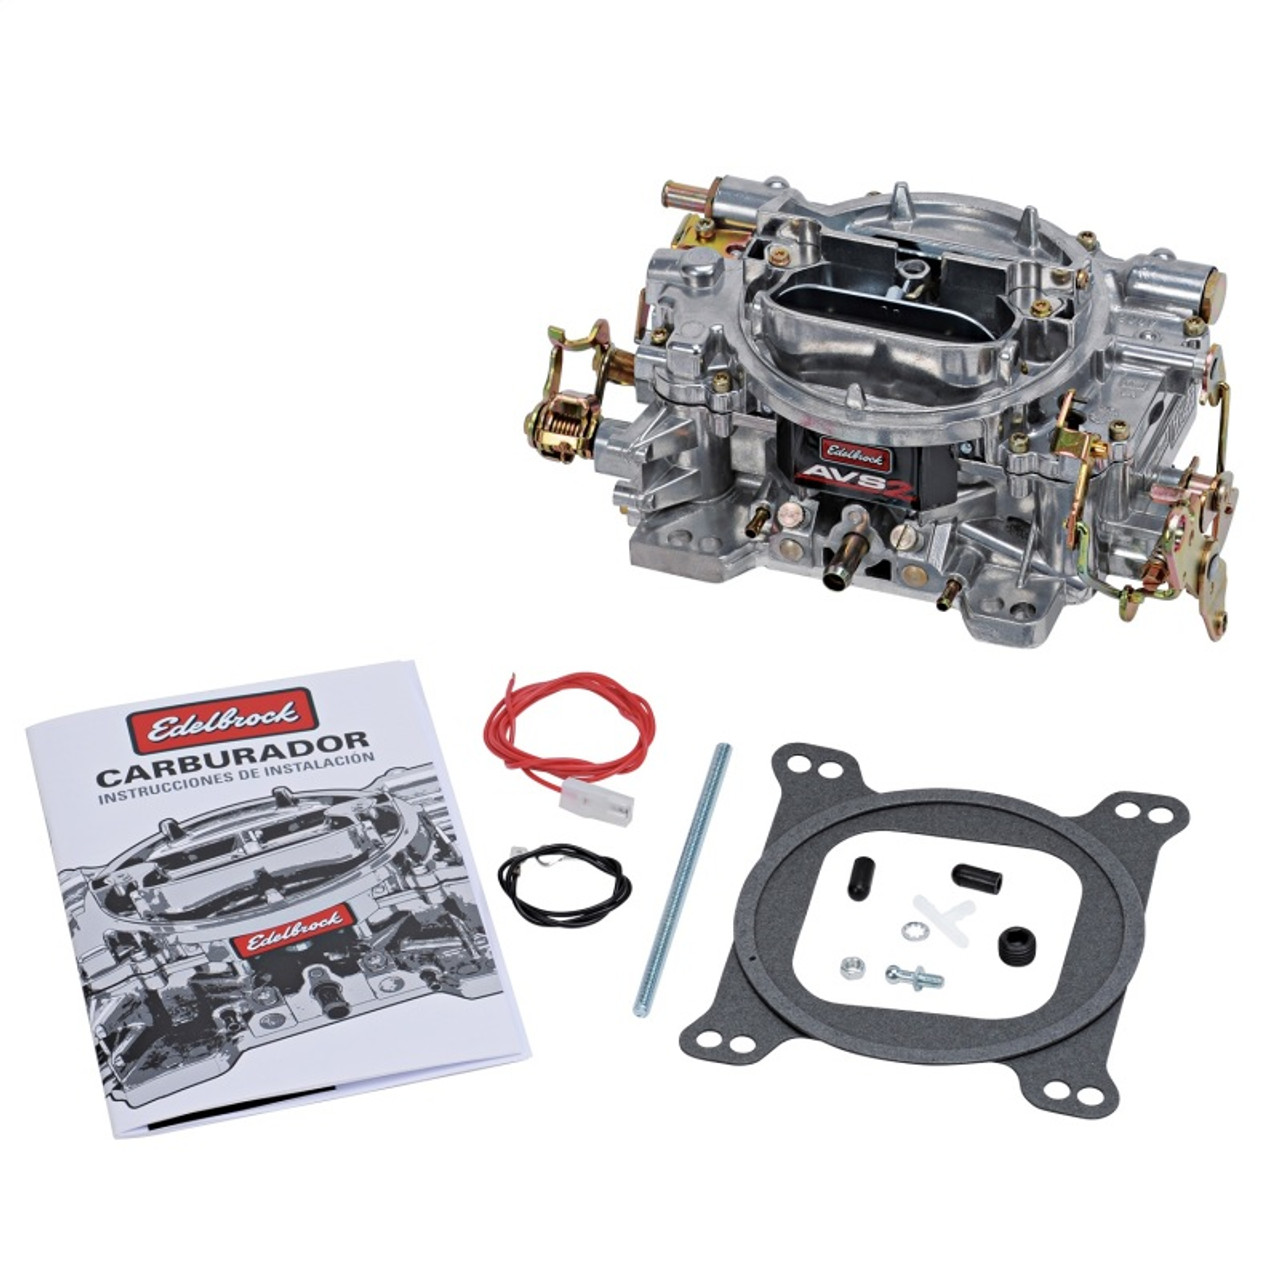 Buy Edelbrock Carburetor Thunder Series 4-Barrel 800 CFM Manual